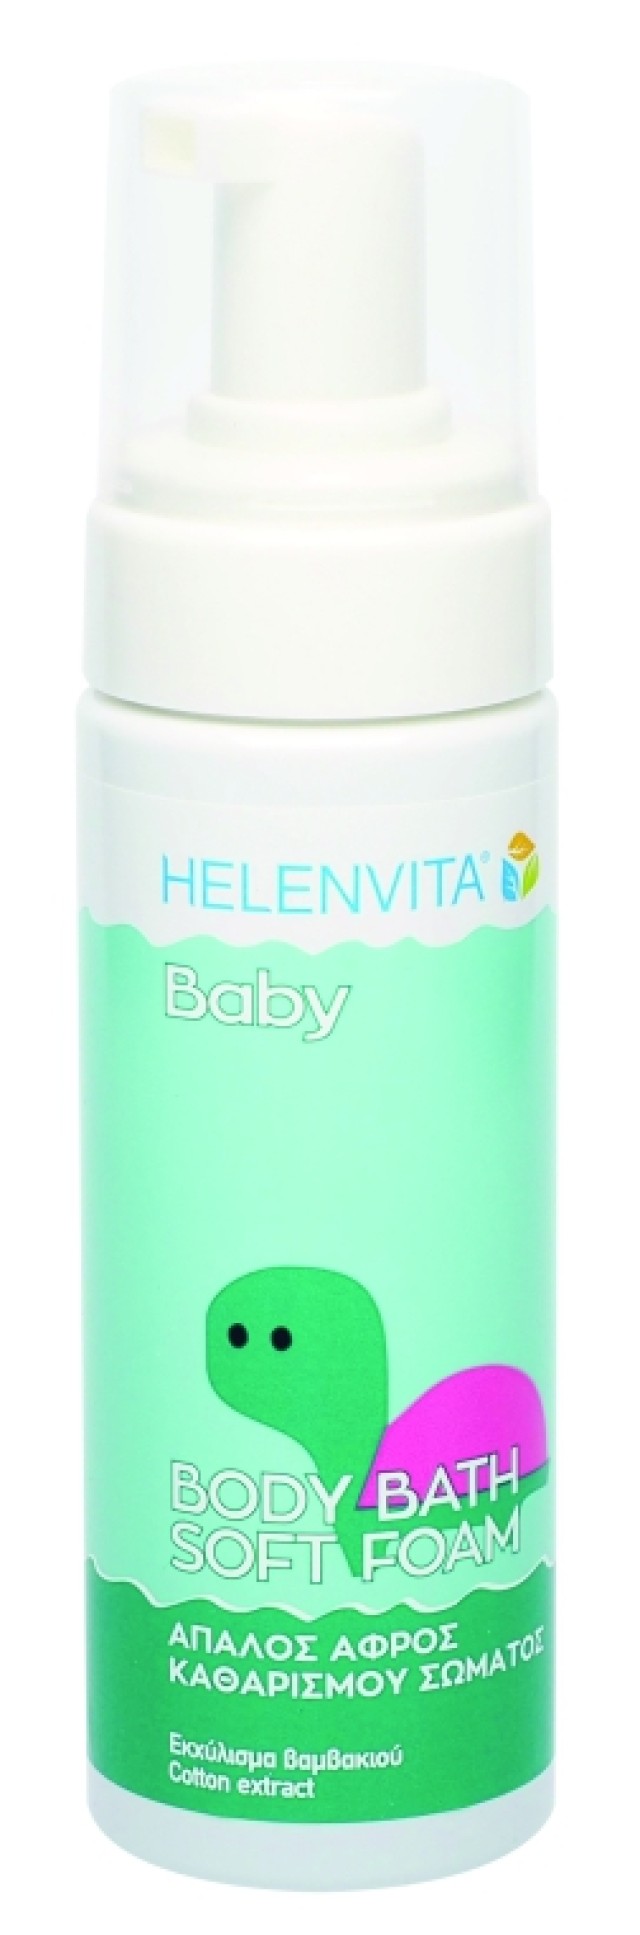 Helenvita Baby Body Bath Soft Foam 150 ml product photo